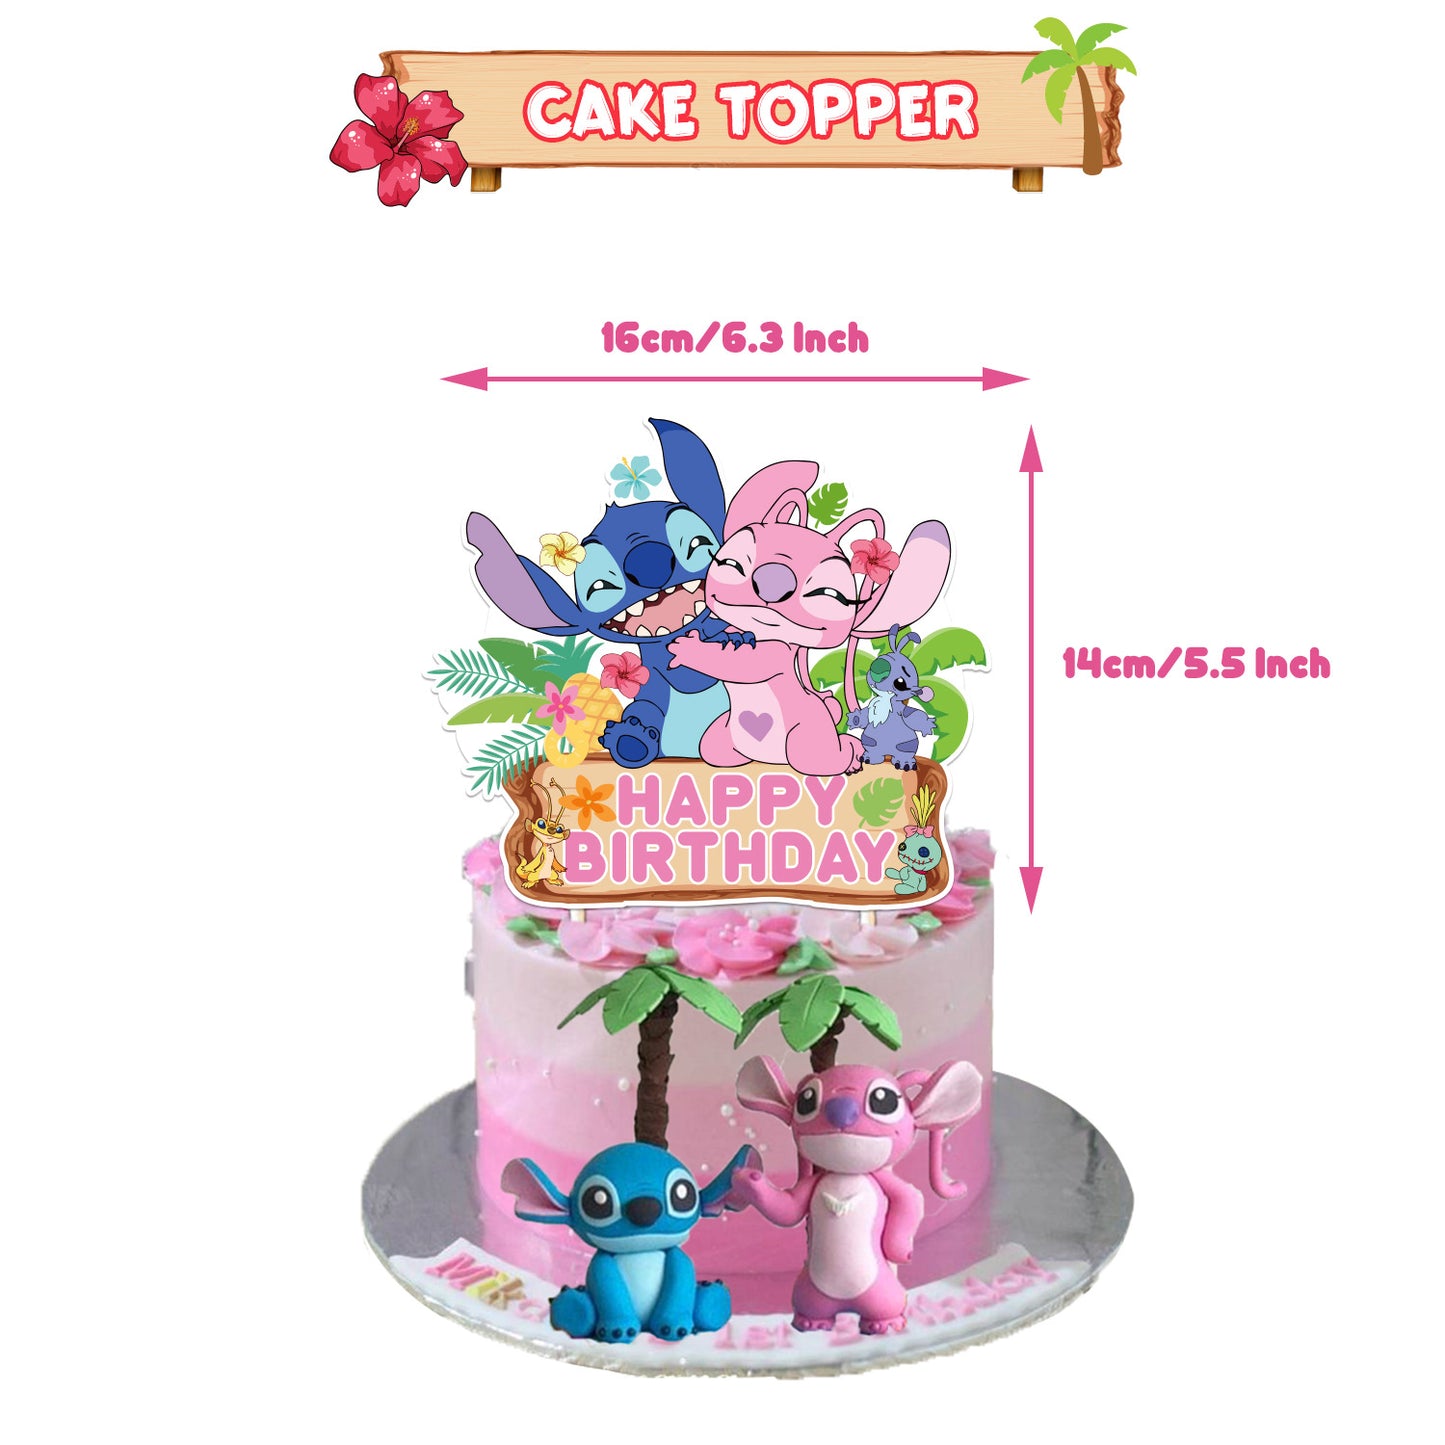 Stitch pink Birthday party set